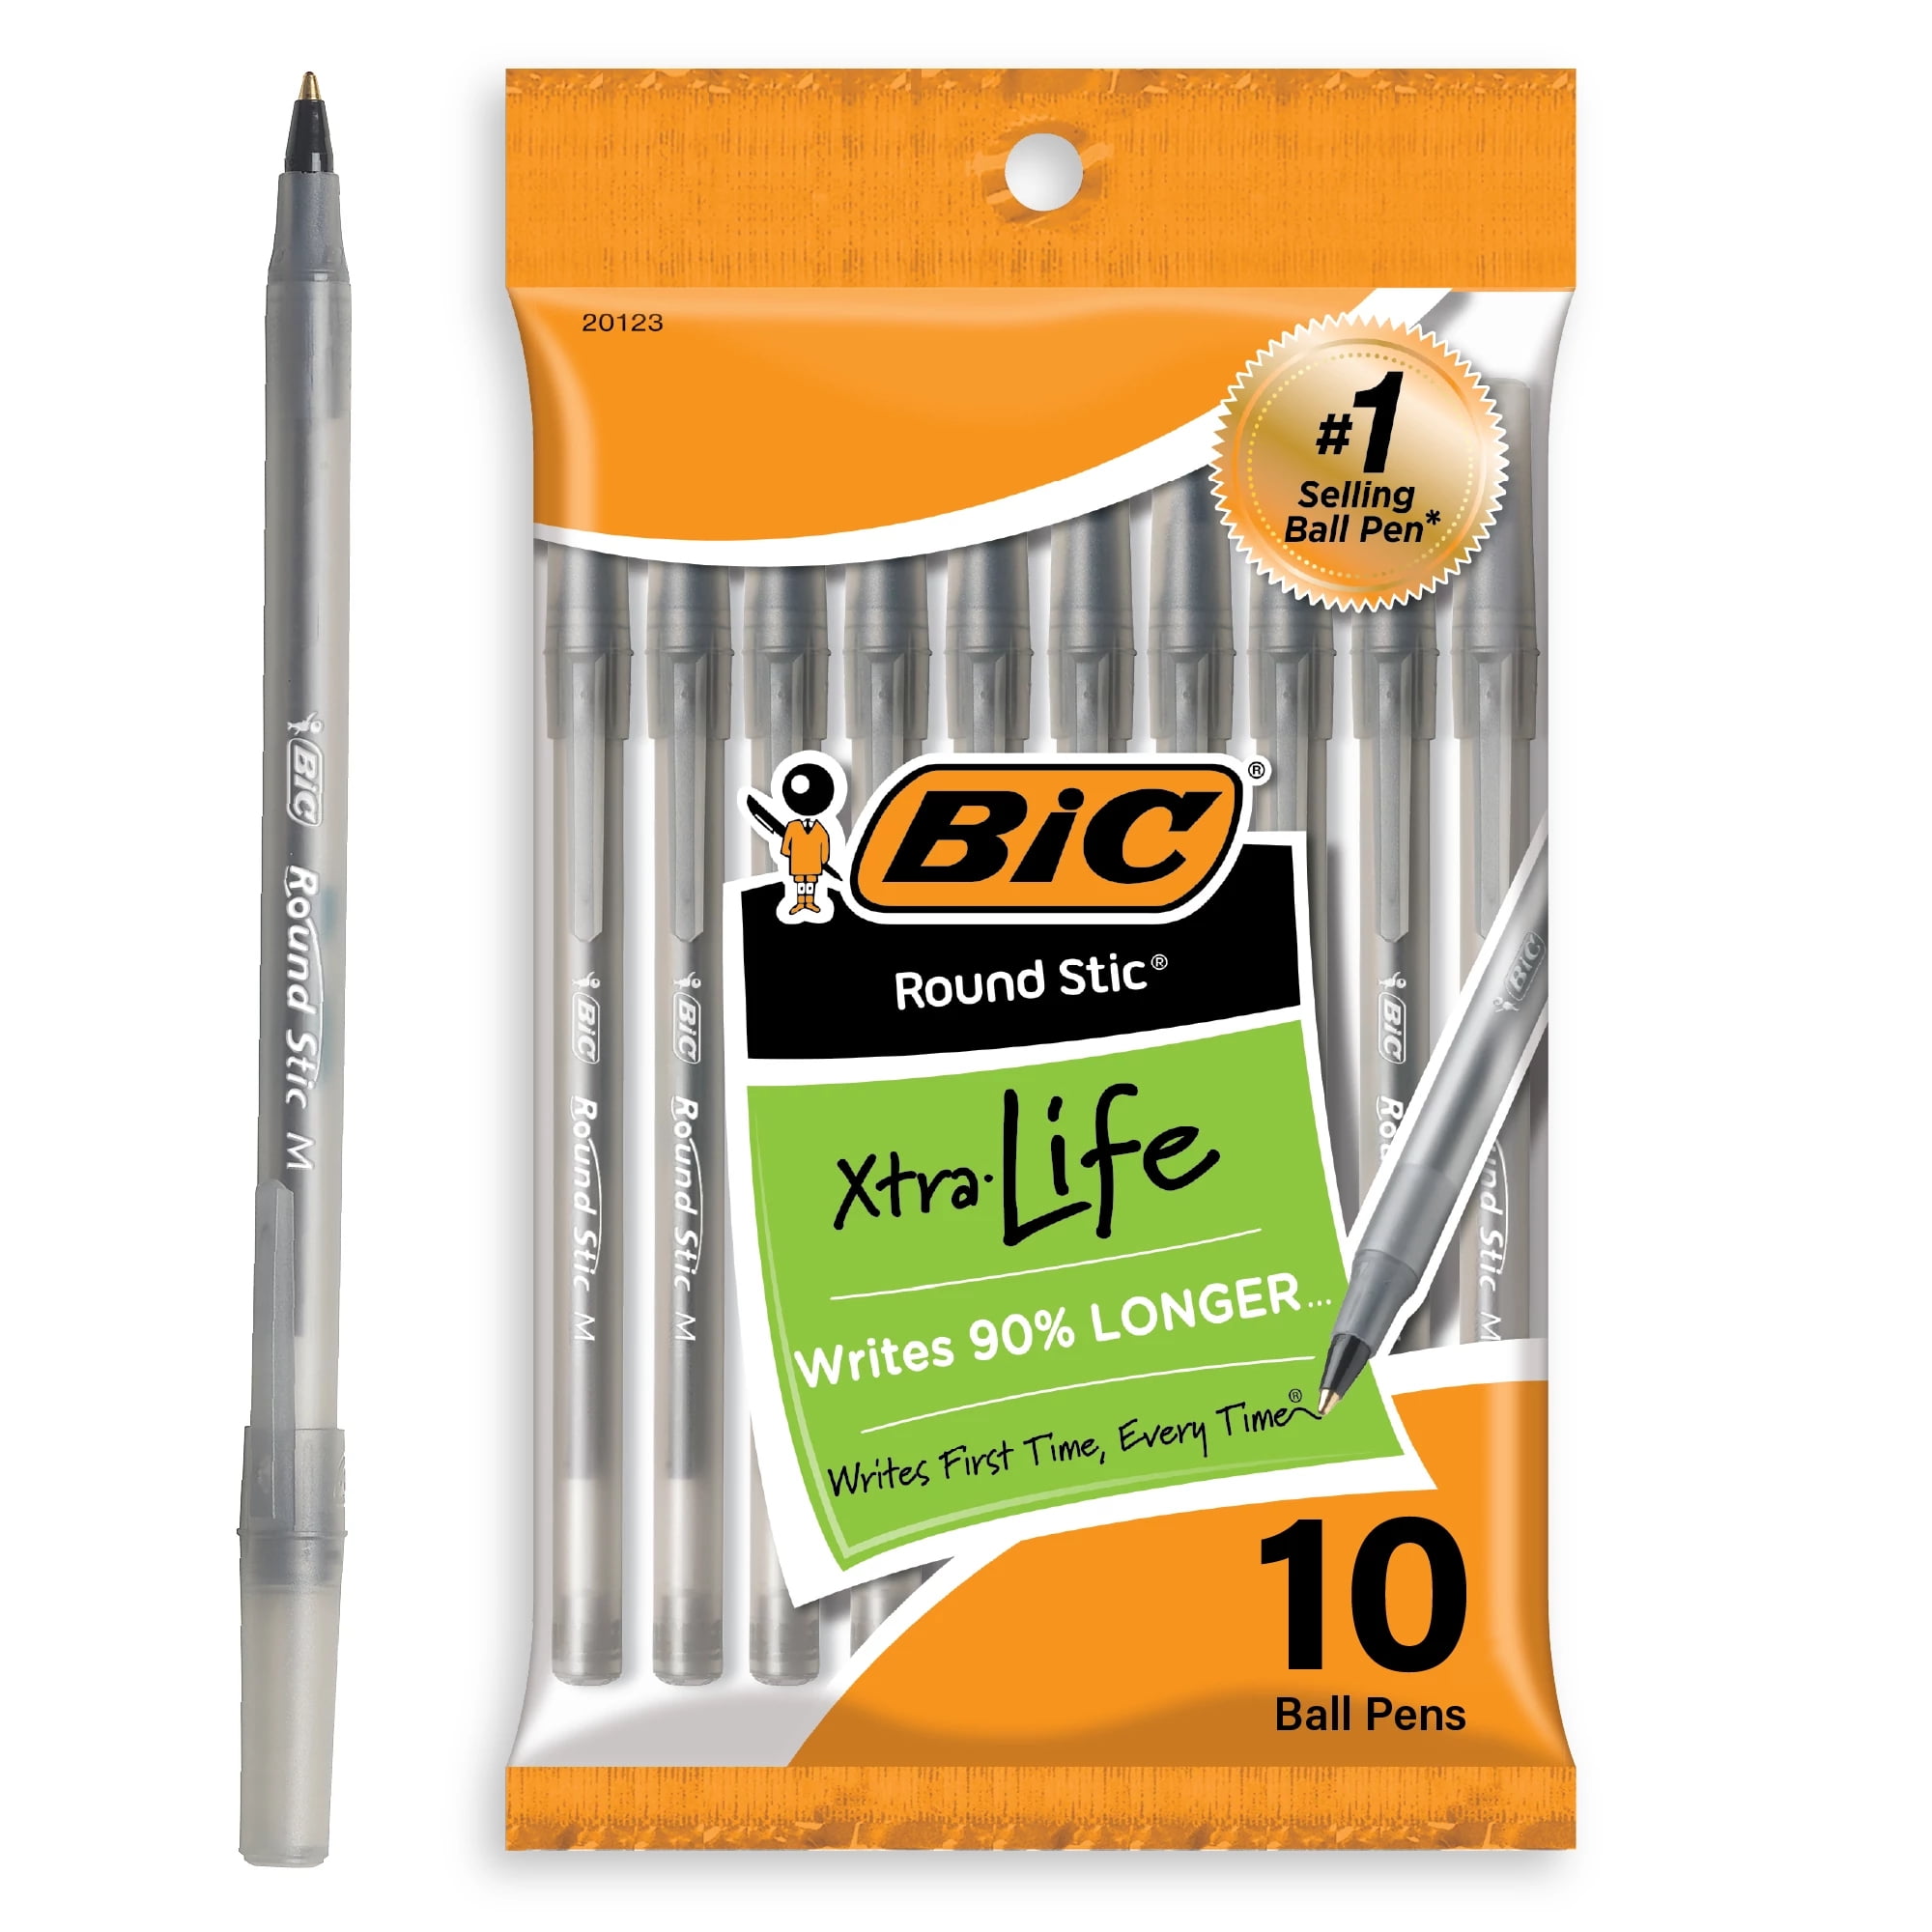 Round Stic Xtra Life Pen, Medium Point (1.0mm), Black, 10 Count Walmart.com